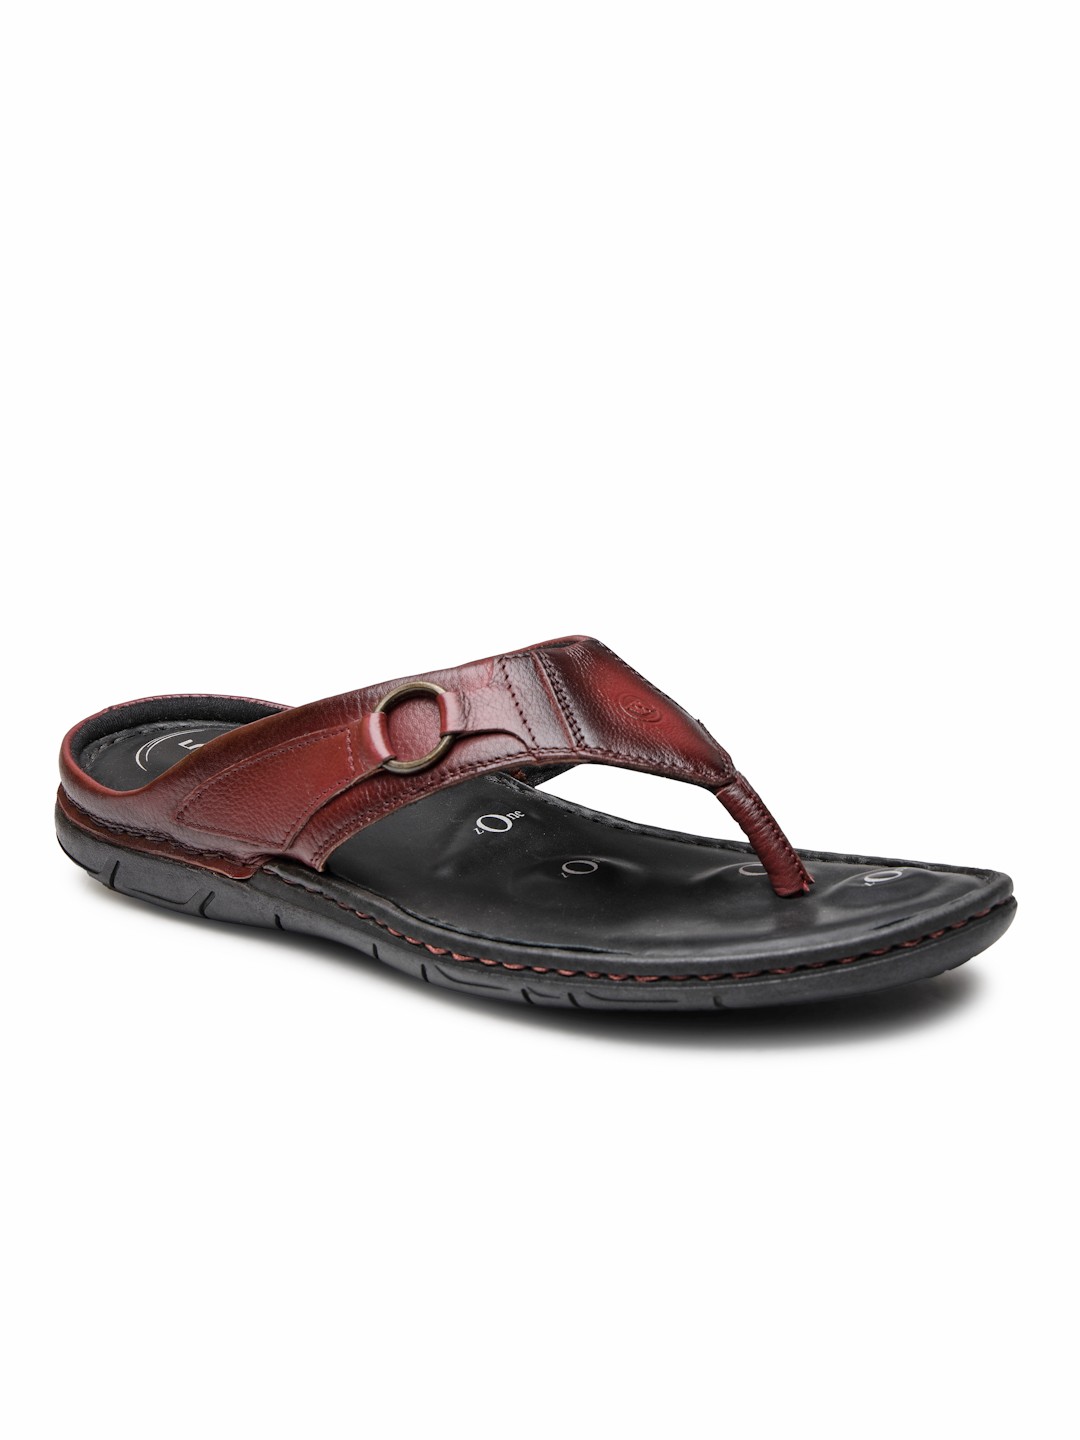 Buy Von Wellx Germany Comfort Men's Brown Slippers Riley Online in Kanpur